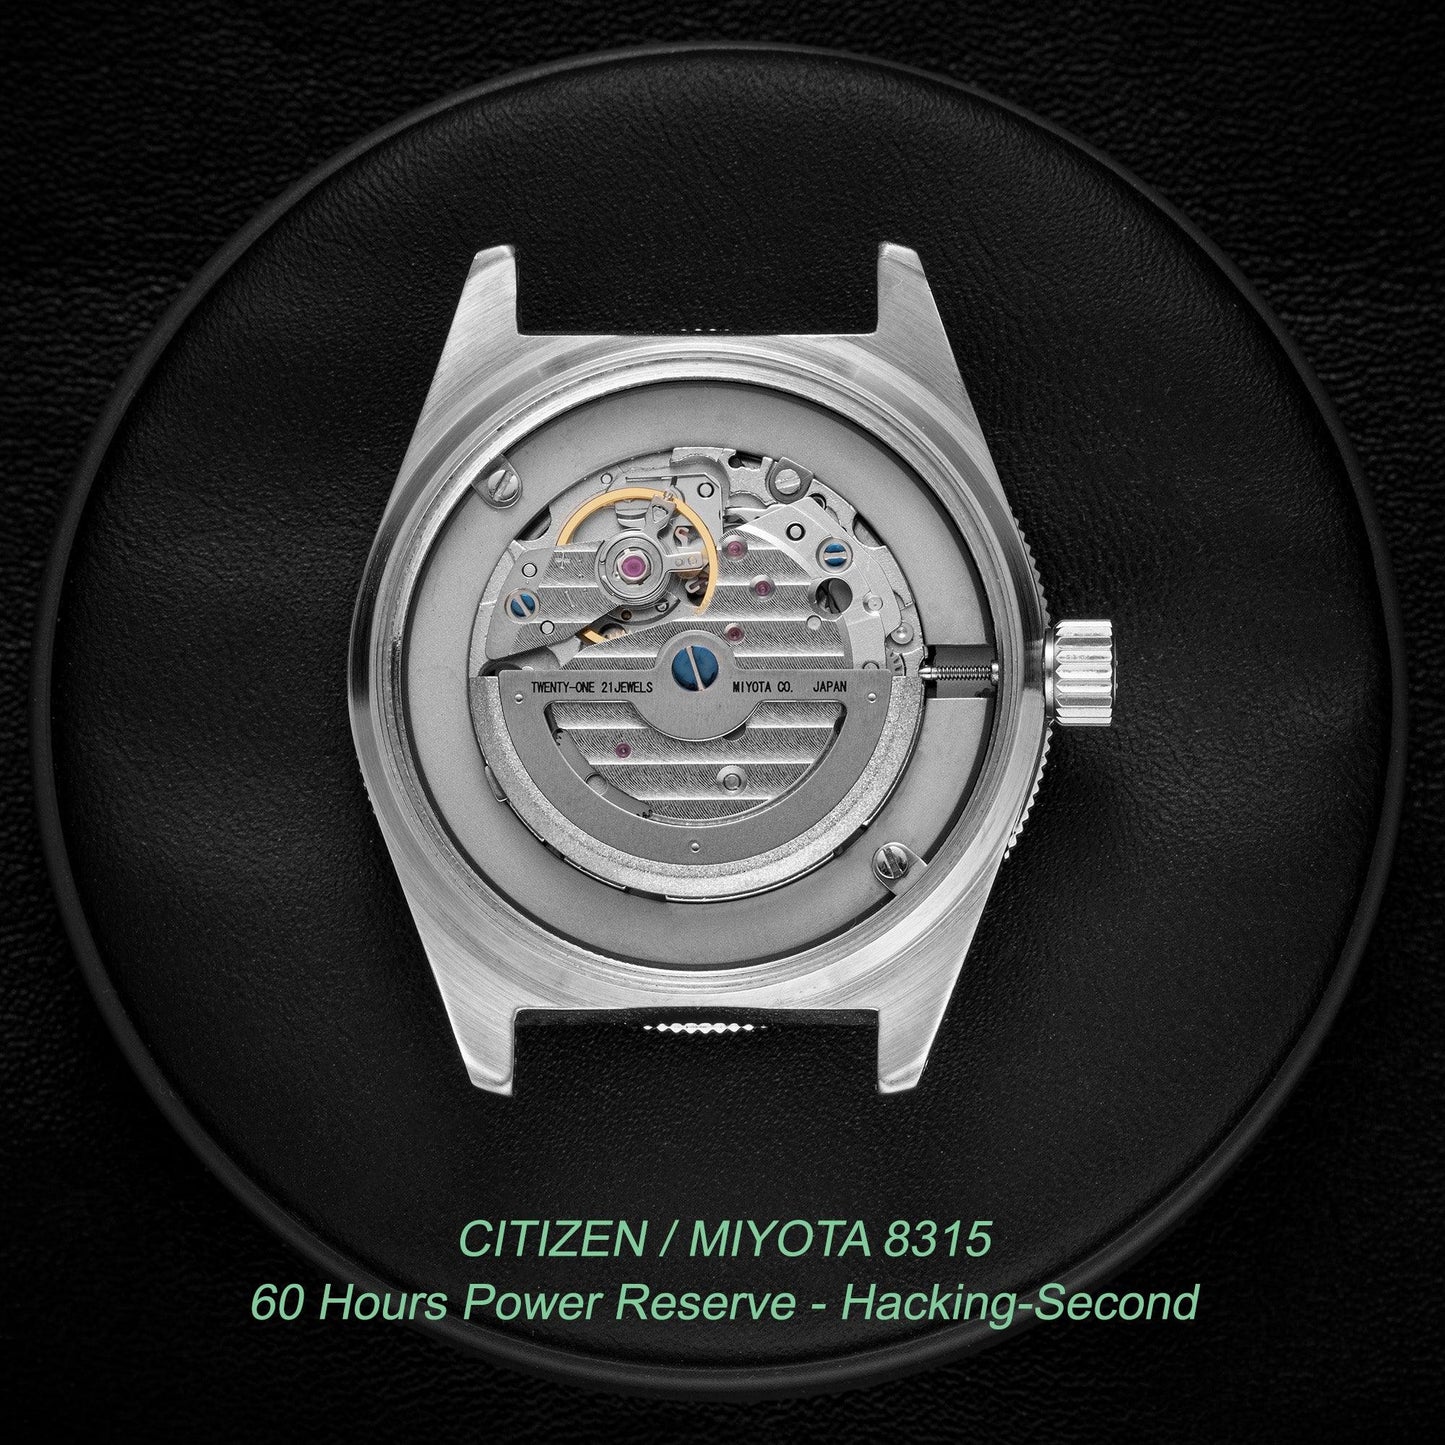 Skindiver Automatic Bracelet Watch – White Dial & Black Bezel - Wolbrook Watches